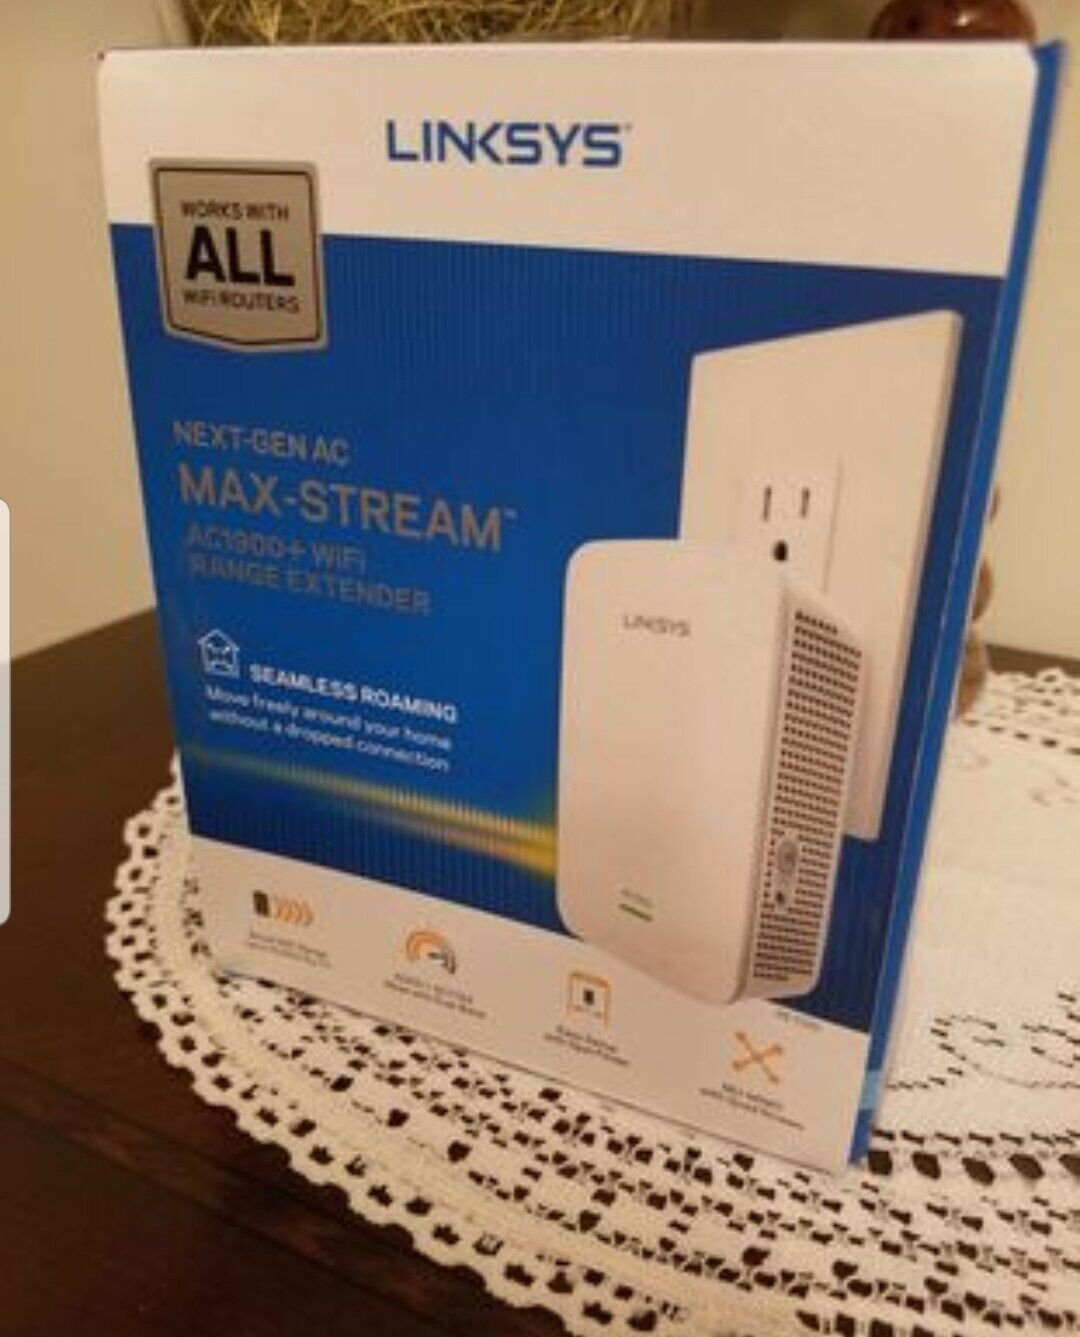 Linksys Next-GEN AC Max-Stream AC1900+ Wi-Fi Range Extender